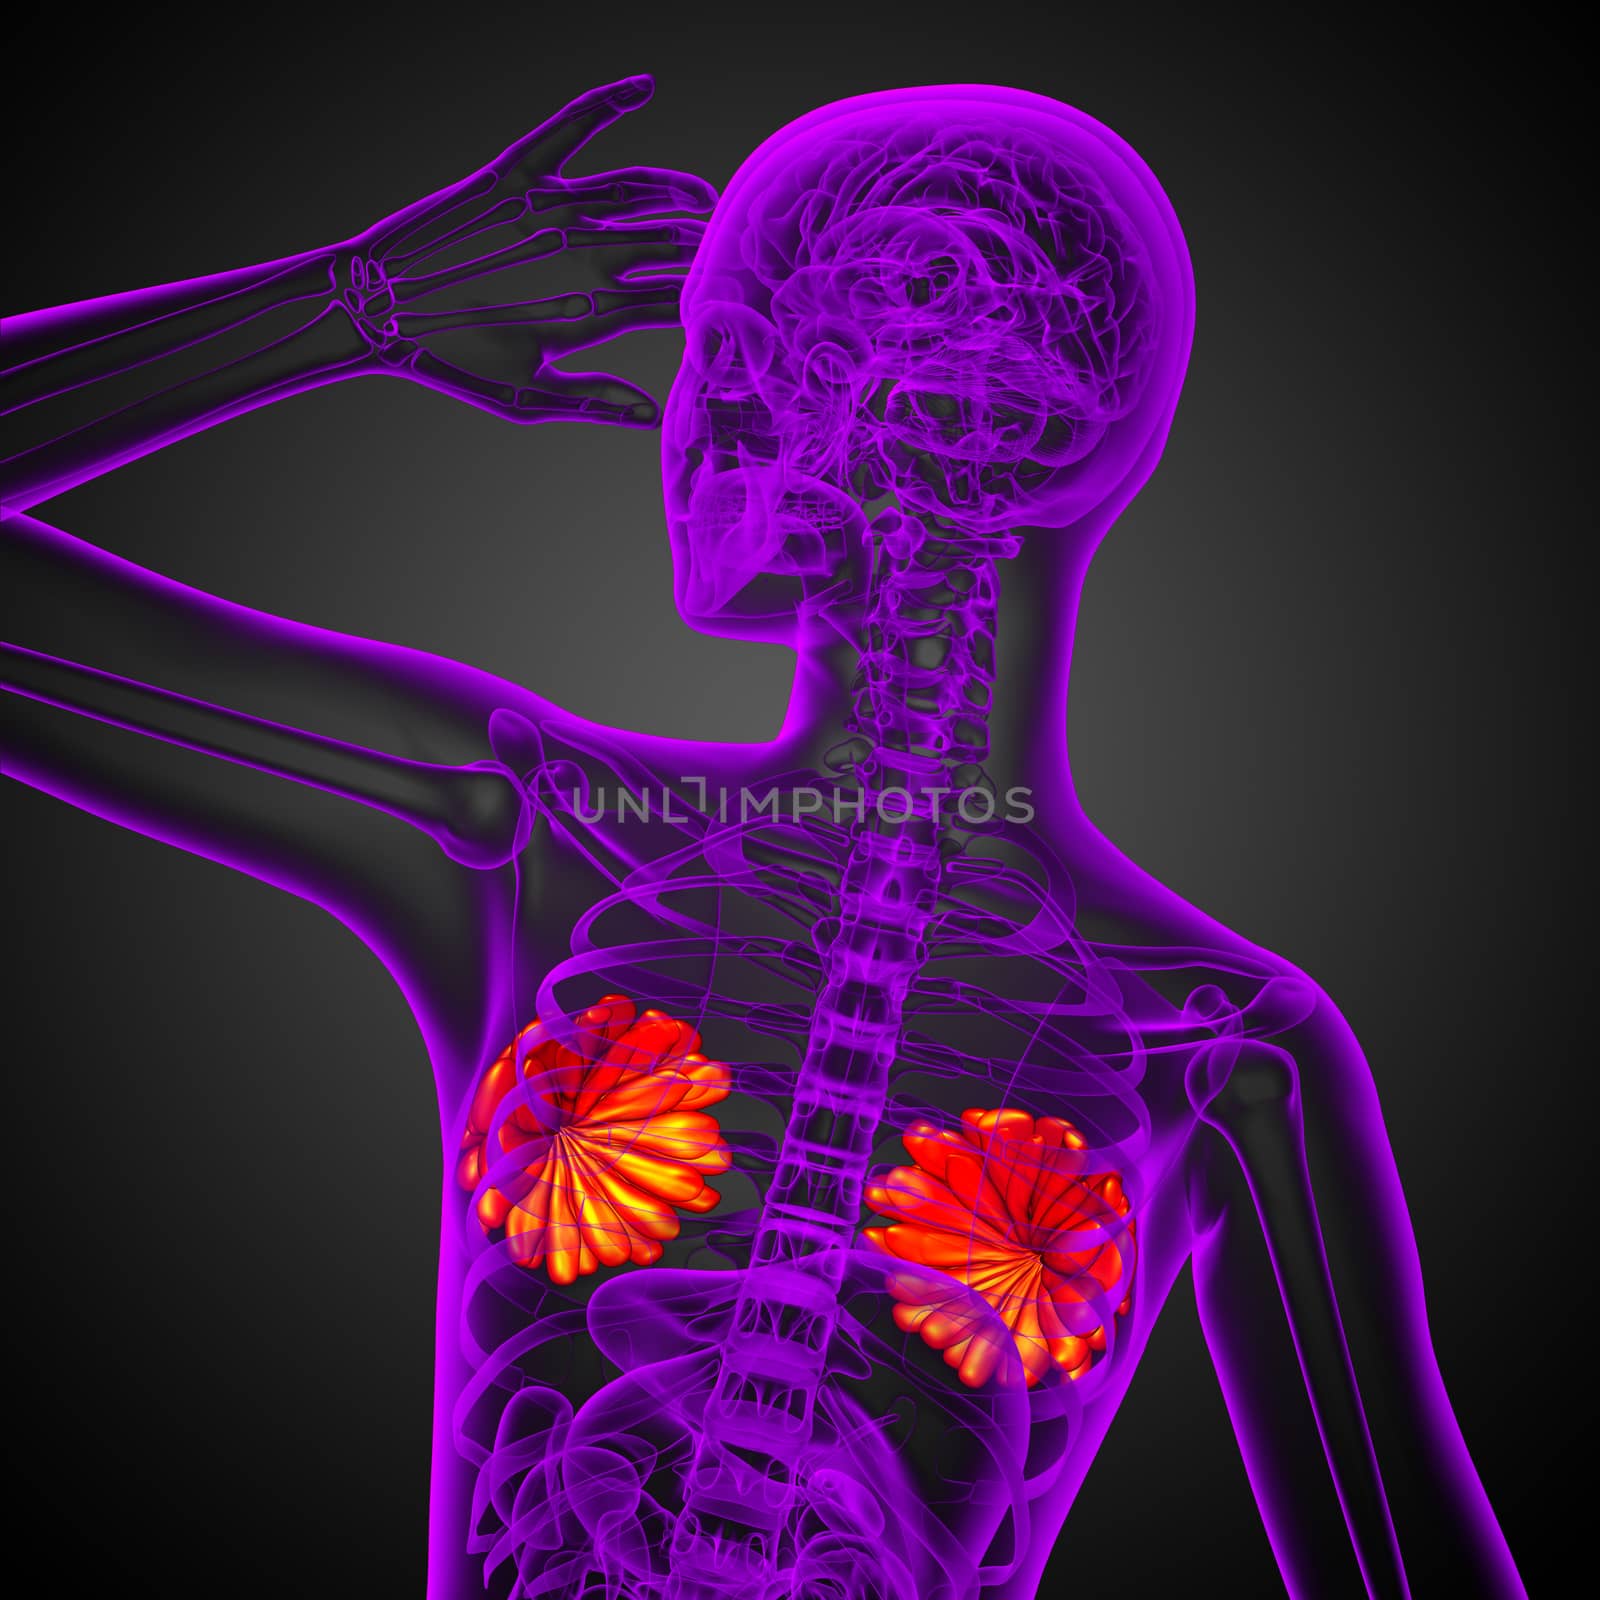 3d render medical illustration of the human breast - back view